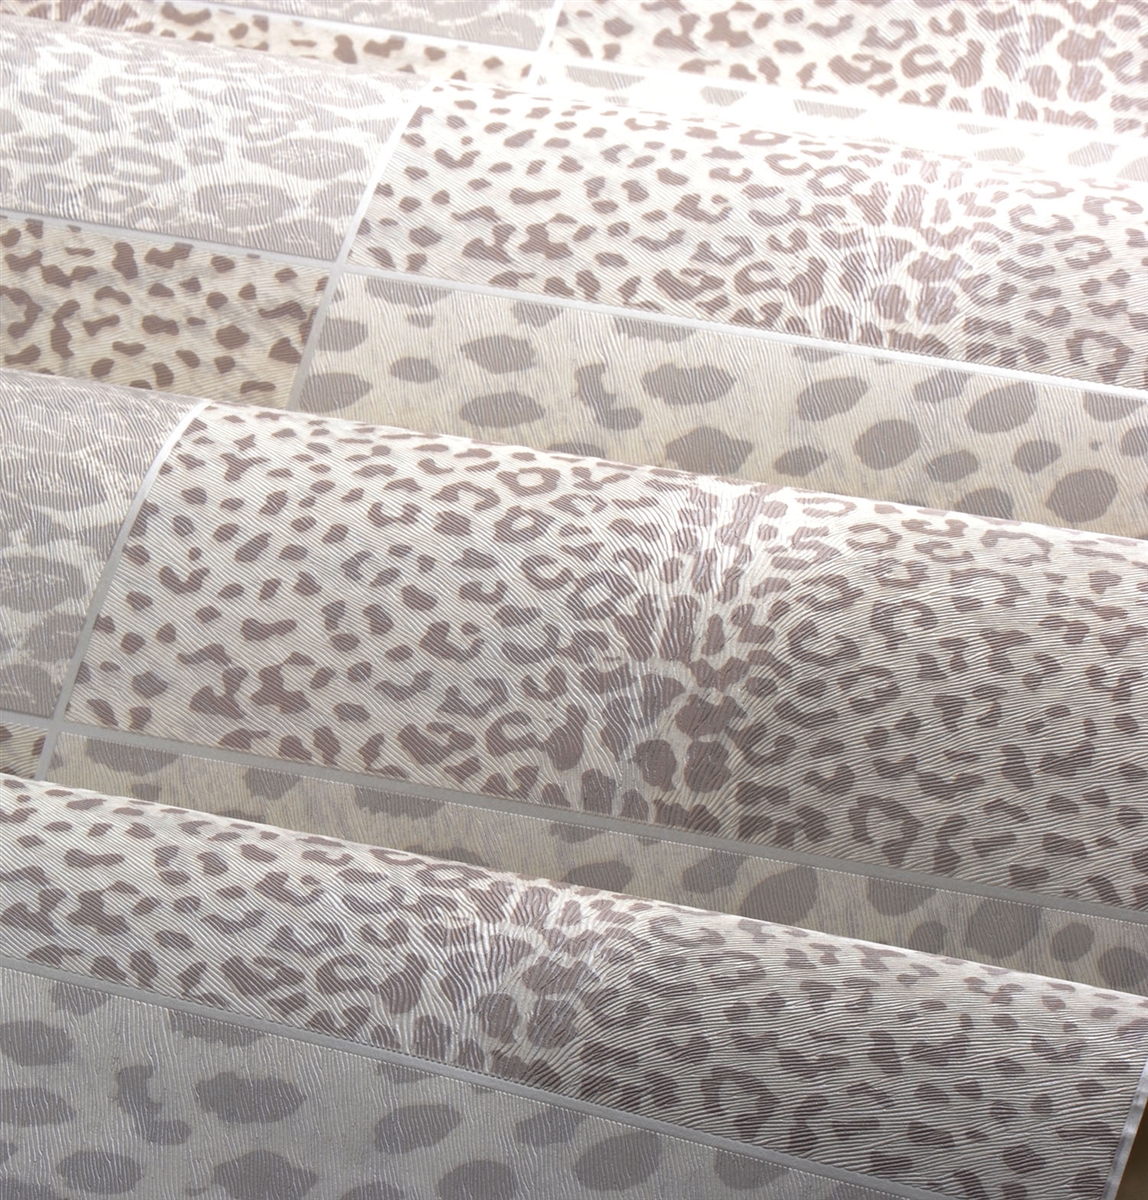 Wp62 Silver Wallpaper Rolls 10m Textured Animal Print Leopard Modern